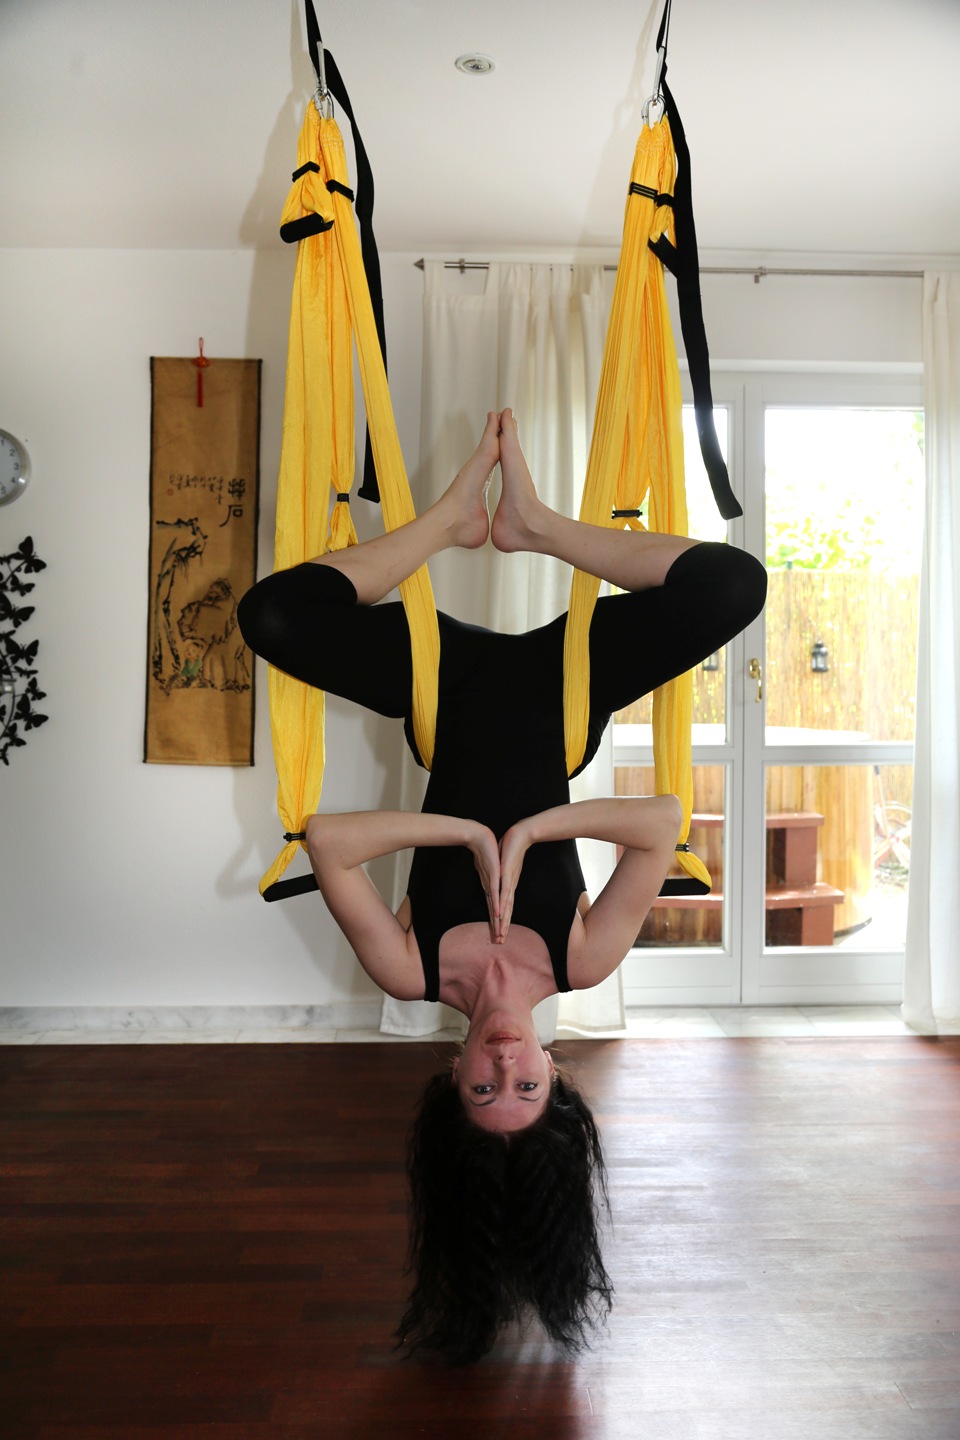 aerial-yoga